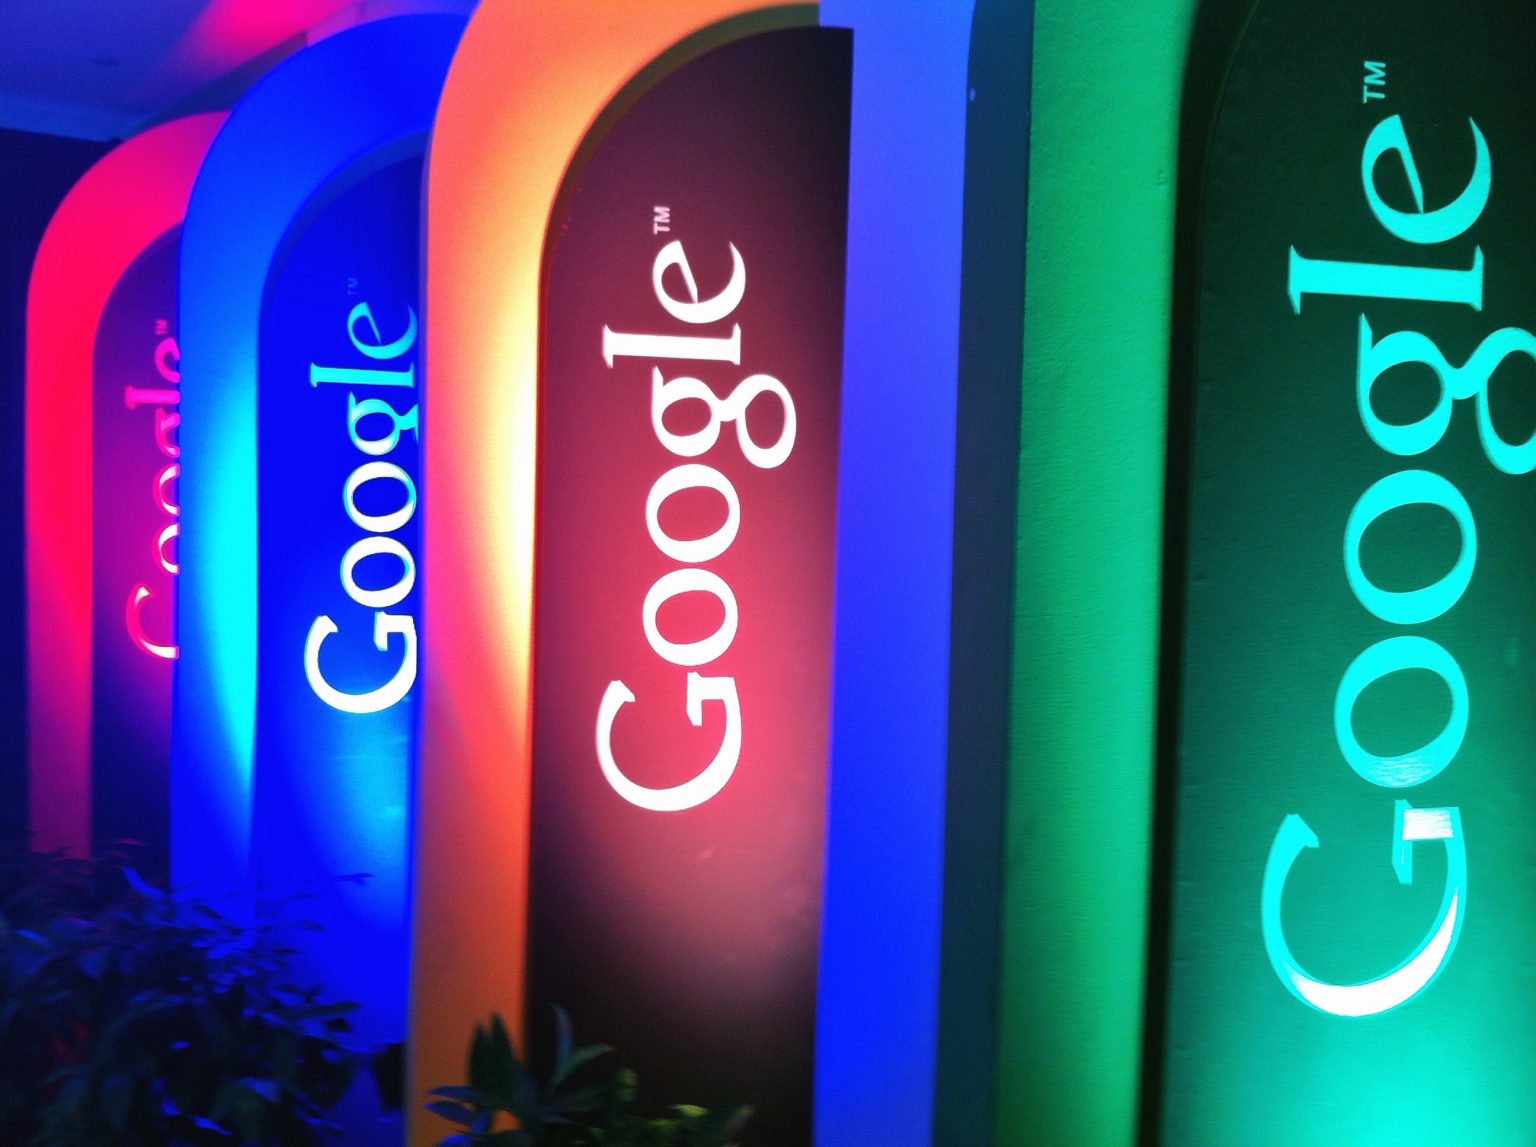 Google AdWords helping economic developers boost community image